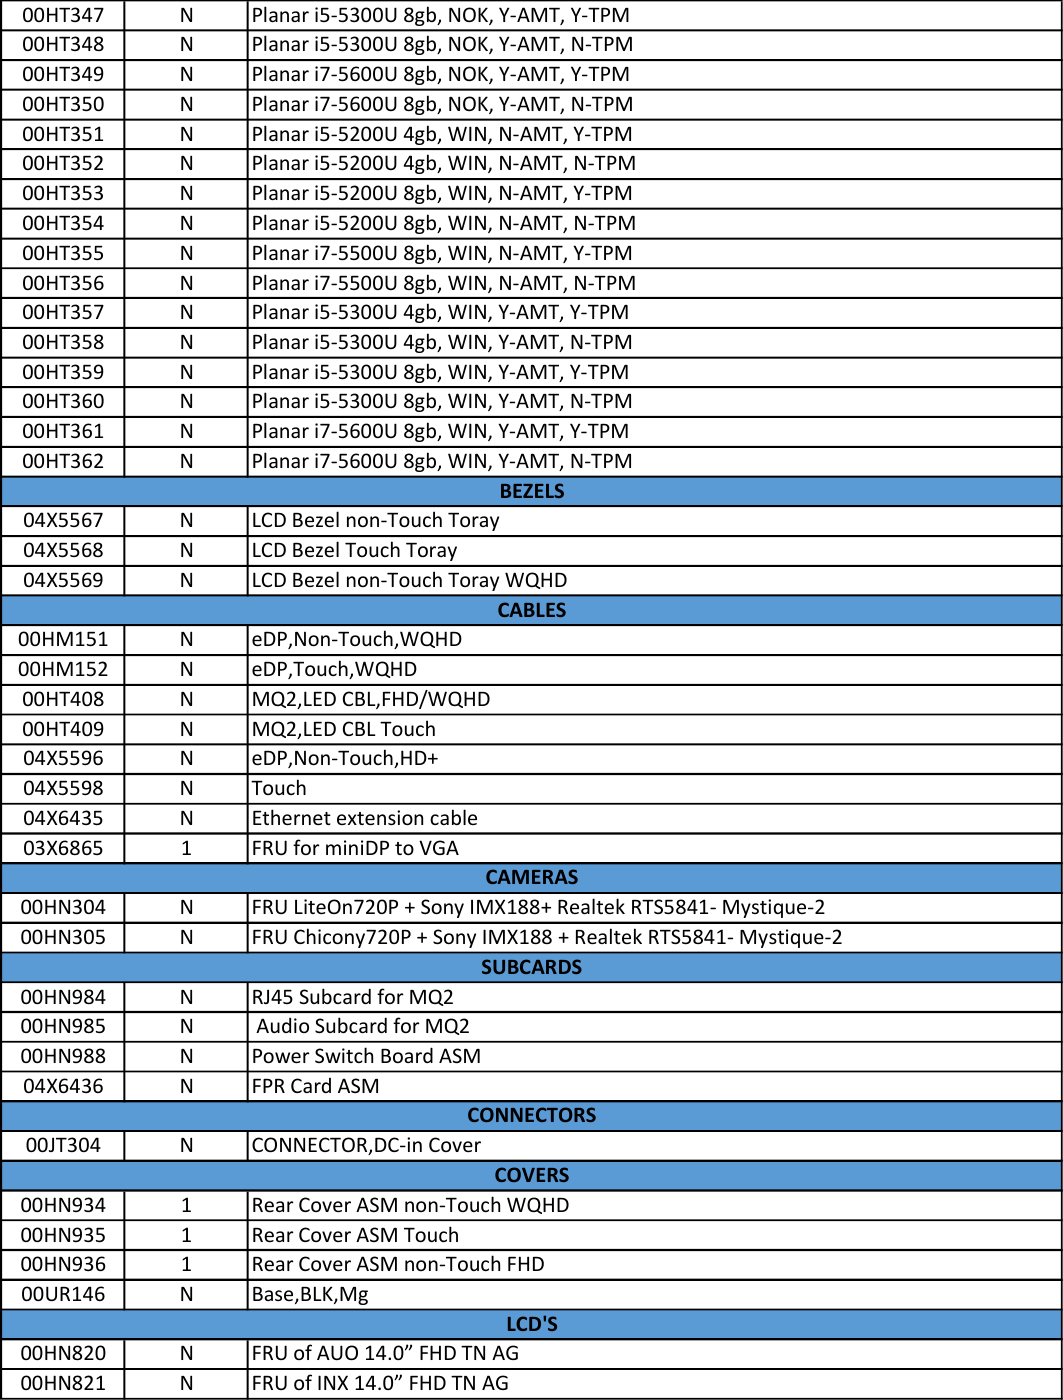 Page 2 of 11 - Lenovo X1Carbon 3 Frubom 20170222 X1 Carbon Gen FRU BOM 20170222x User Manual 3rd (Type 20BS, 20BT) Laptop (Think Pad) - Type 20BT